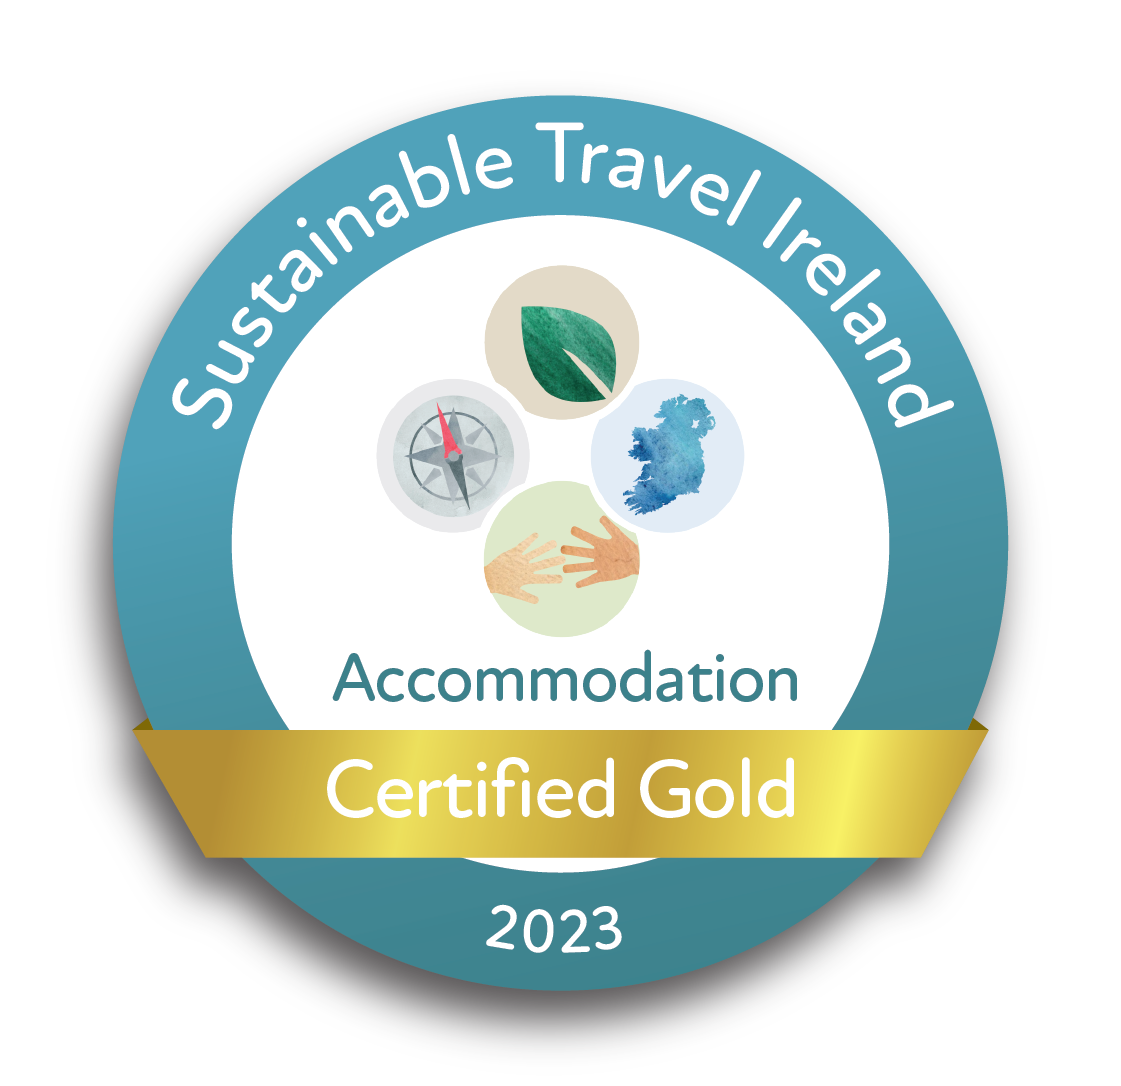 Sustainable Travel Ireland Certified Gold Accommodation 2023 Badge